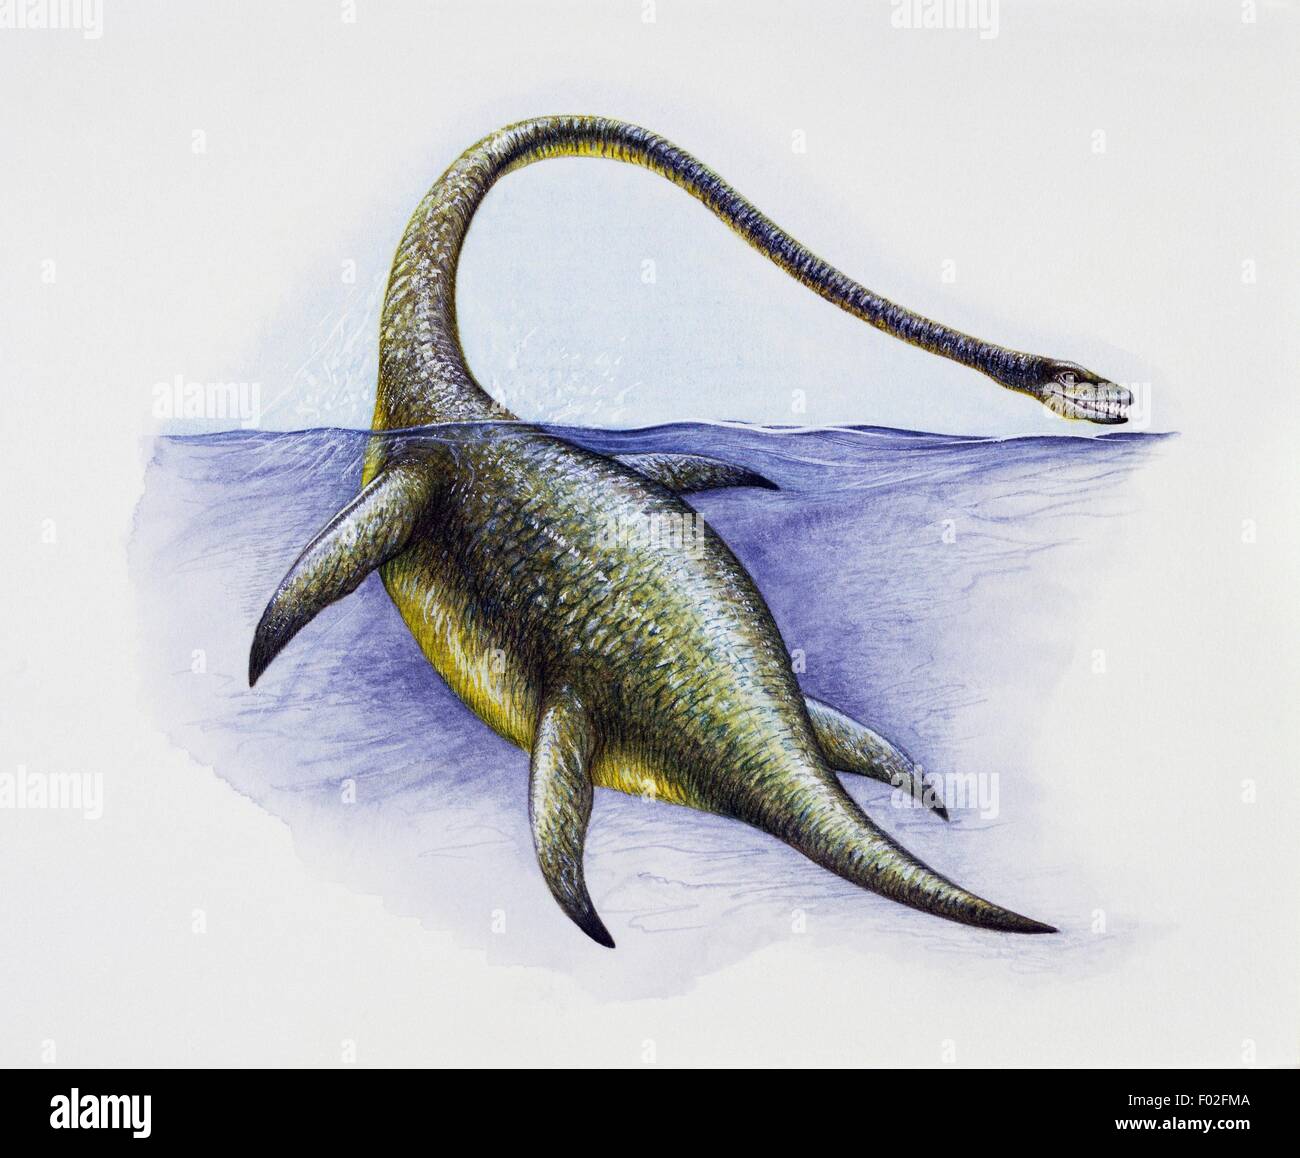 Elasmosaurus platyurus, Elasmosauridae, Late Cretaceous. Artwork by Stephen Roberts. Stock Photo